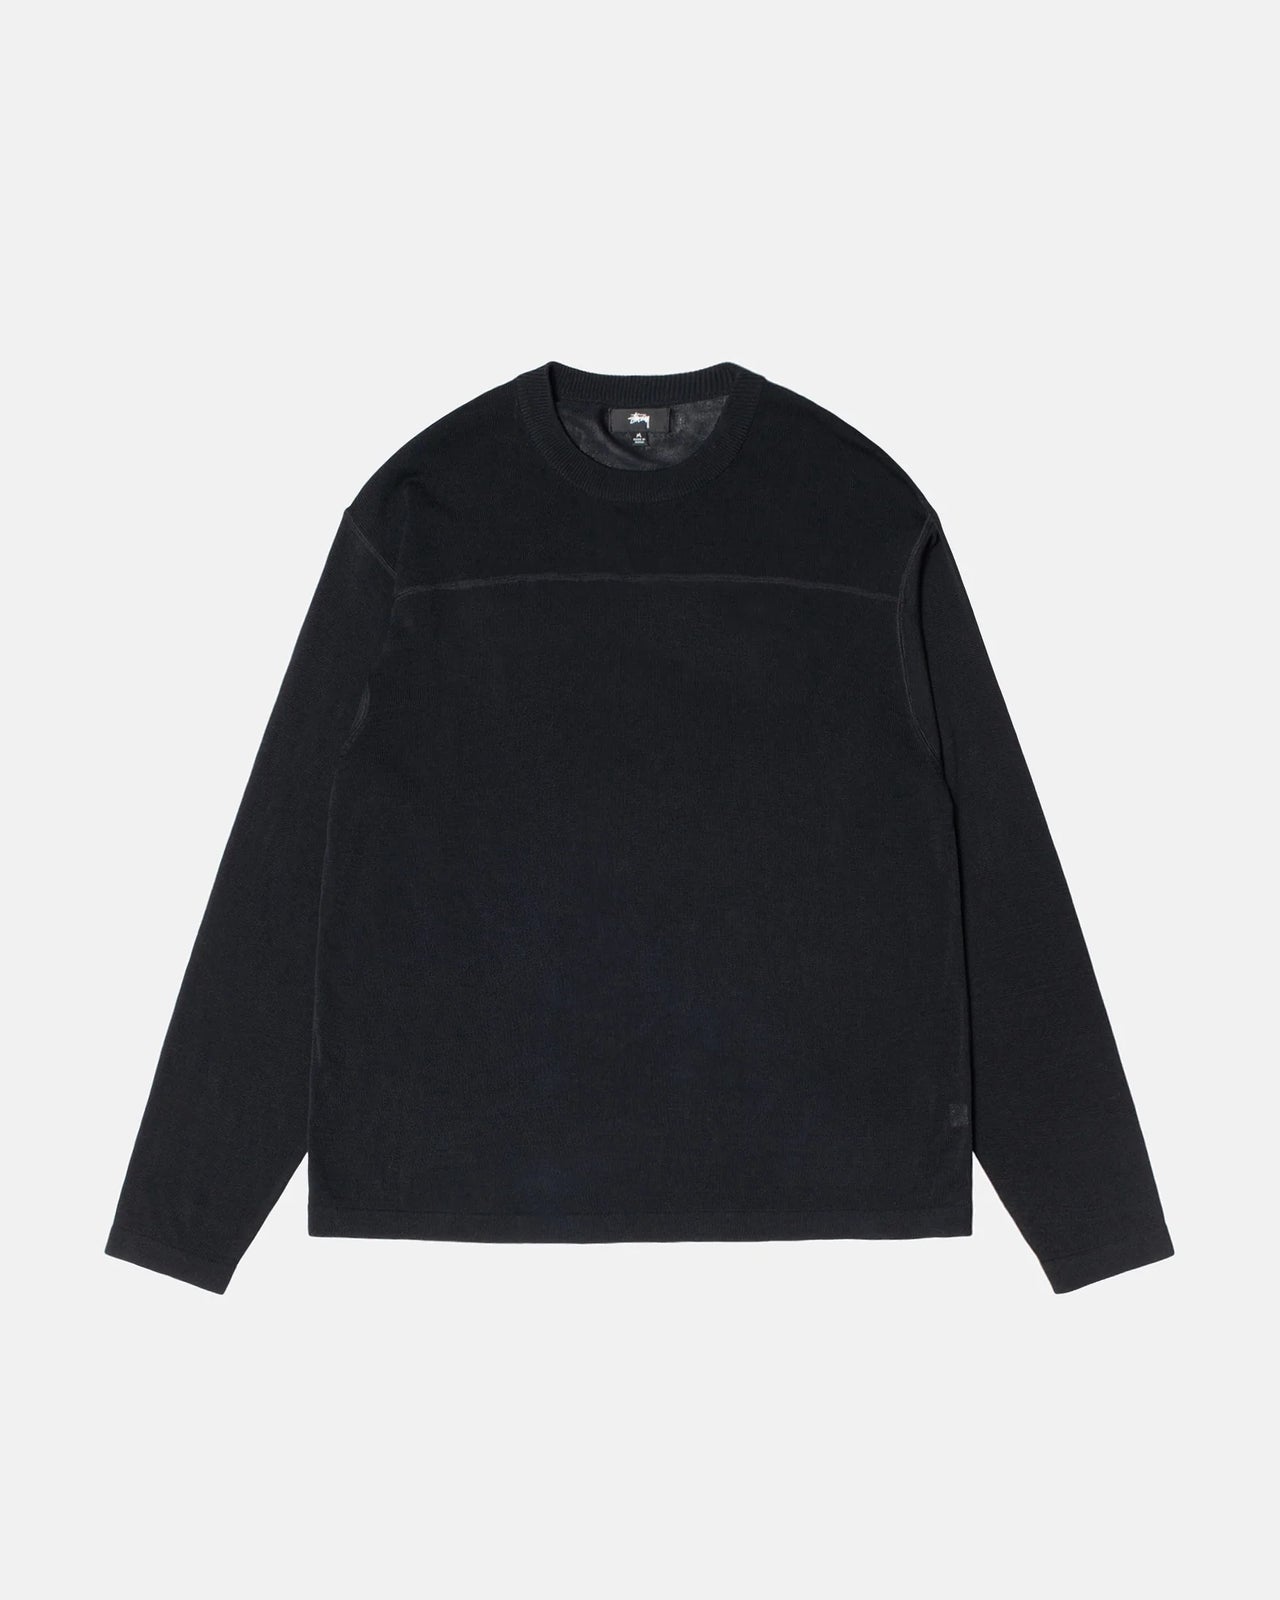 Stussy Football Sweater Black